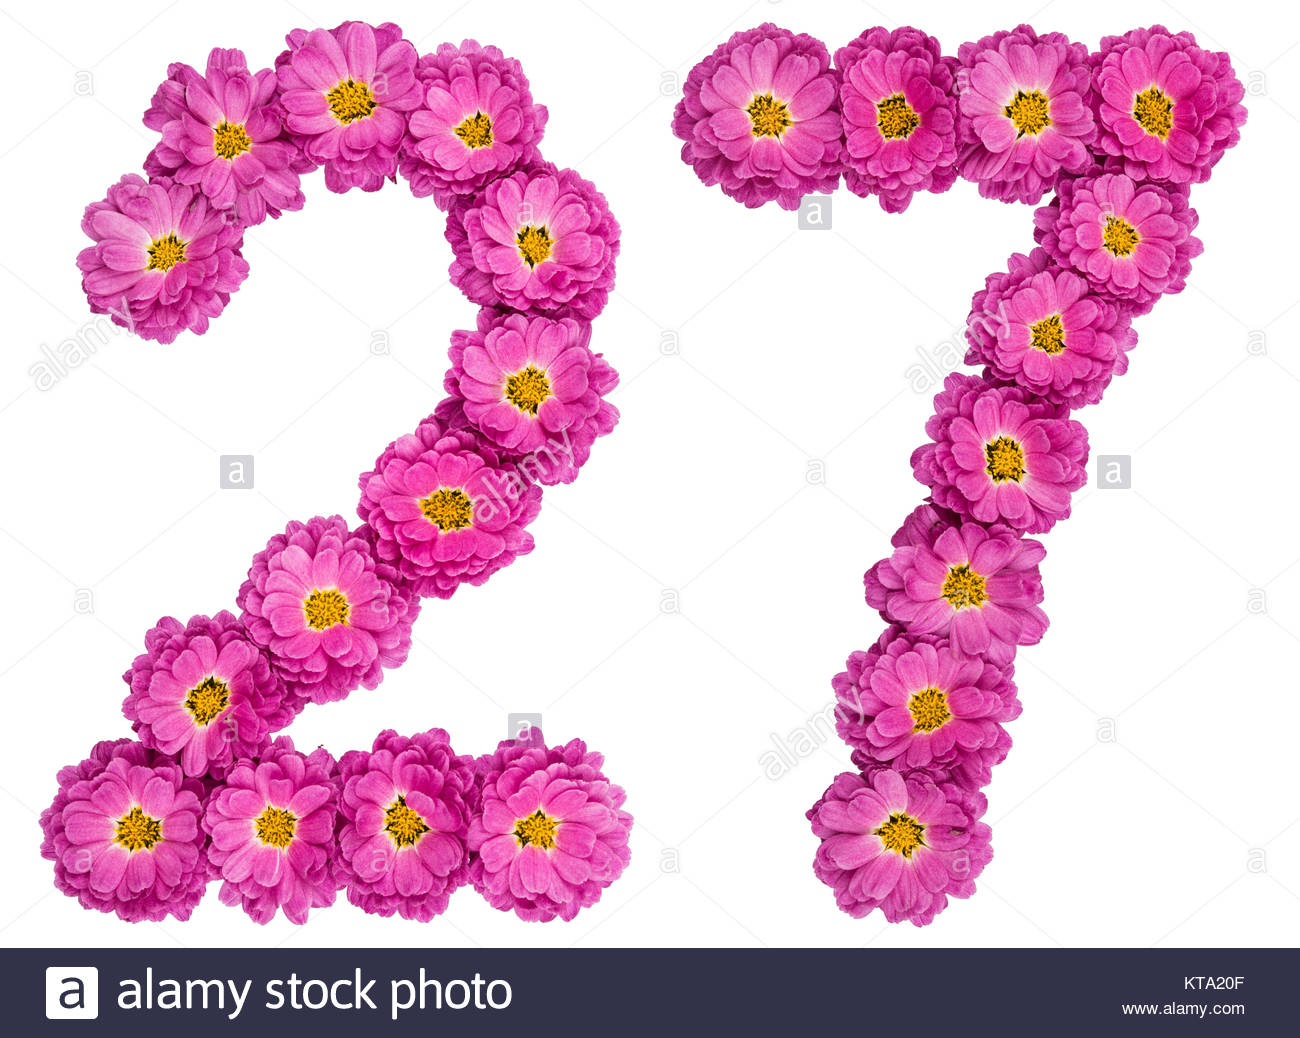 Arabic Numeral Twenty Seven From Flowers Of Chrysanthemum